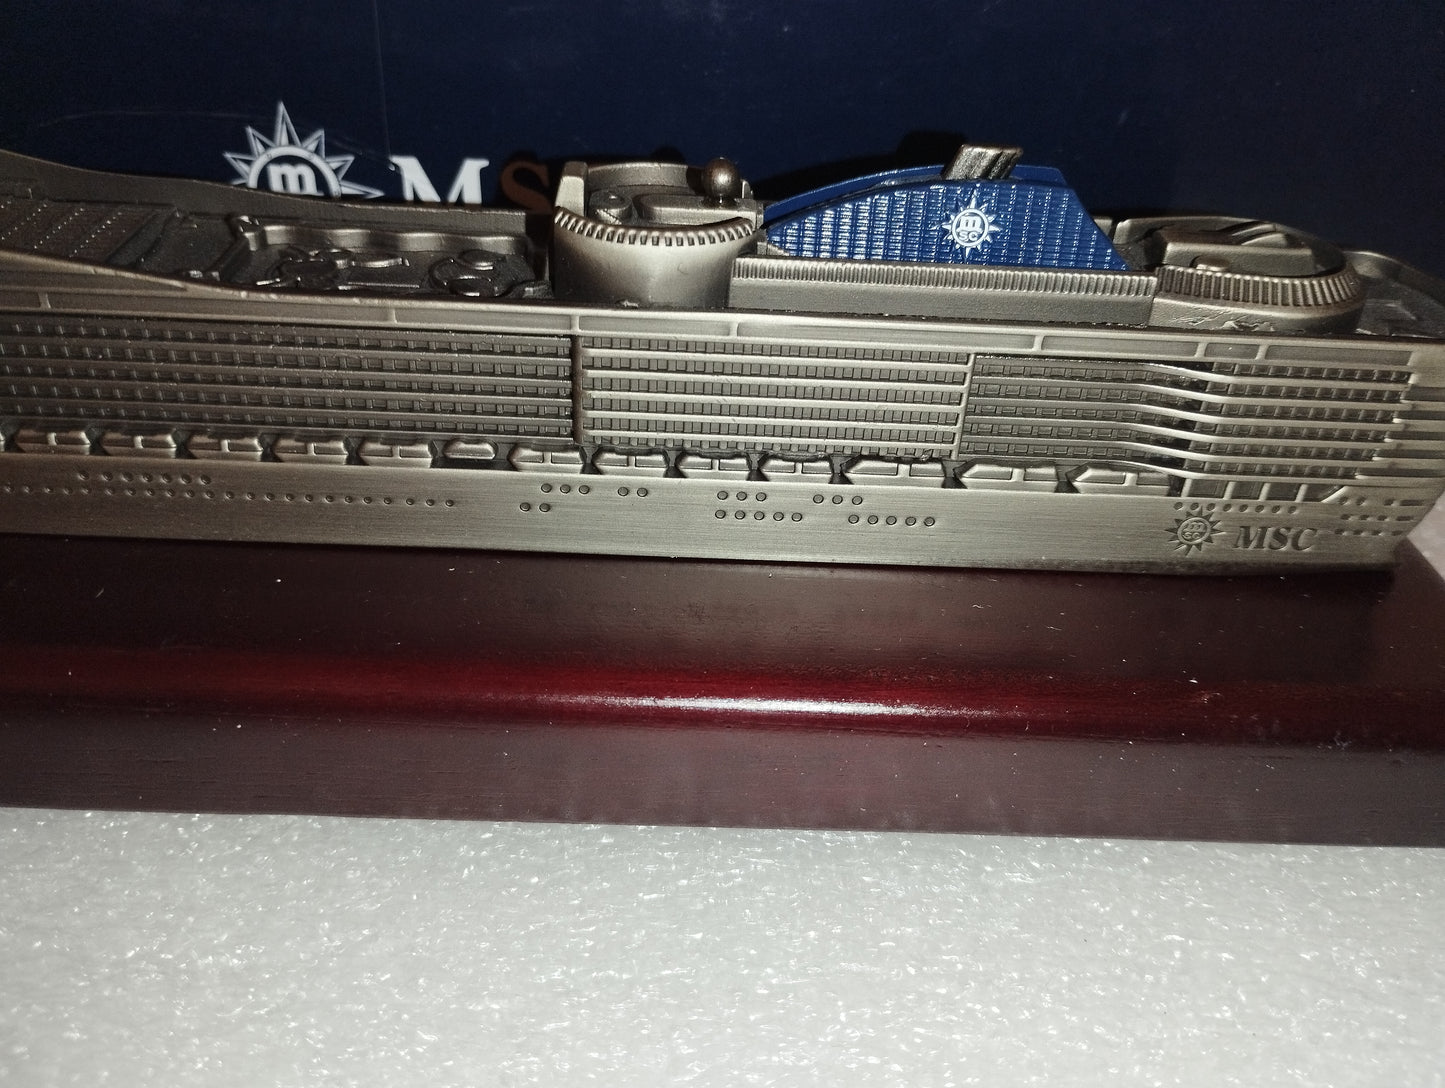 Model Ship MSC Divina
 In metal with wooden base
 Model length 26 cm